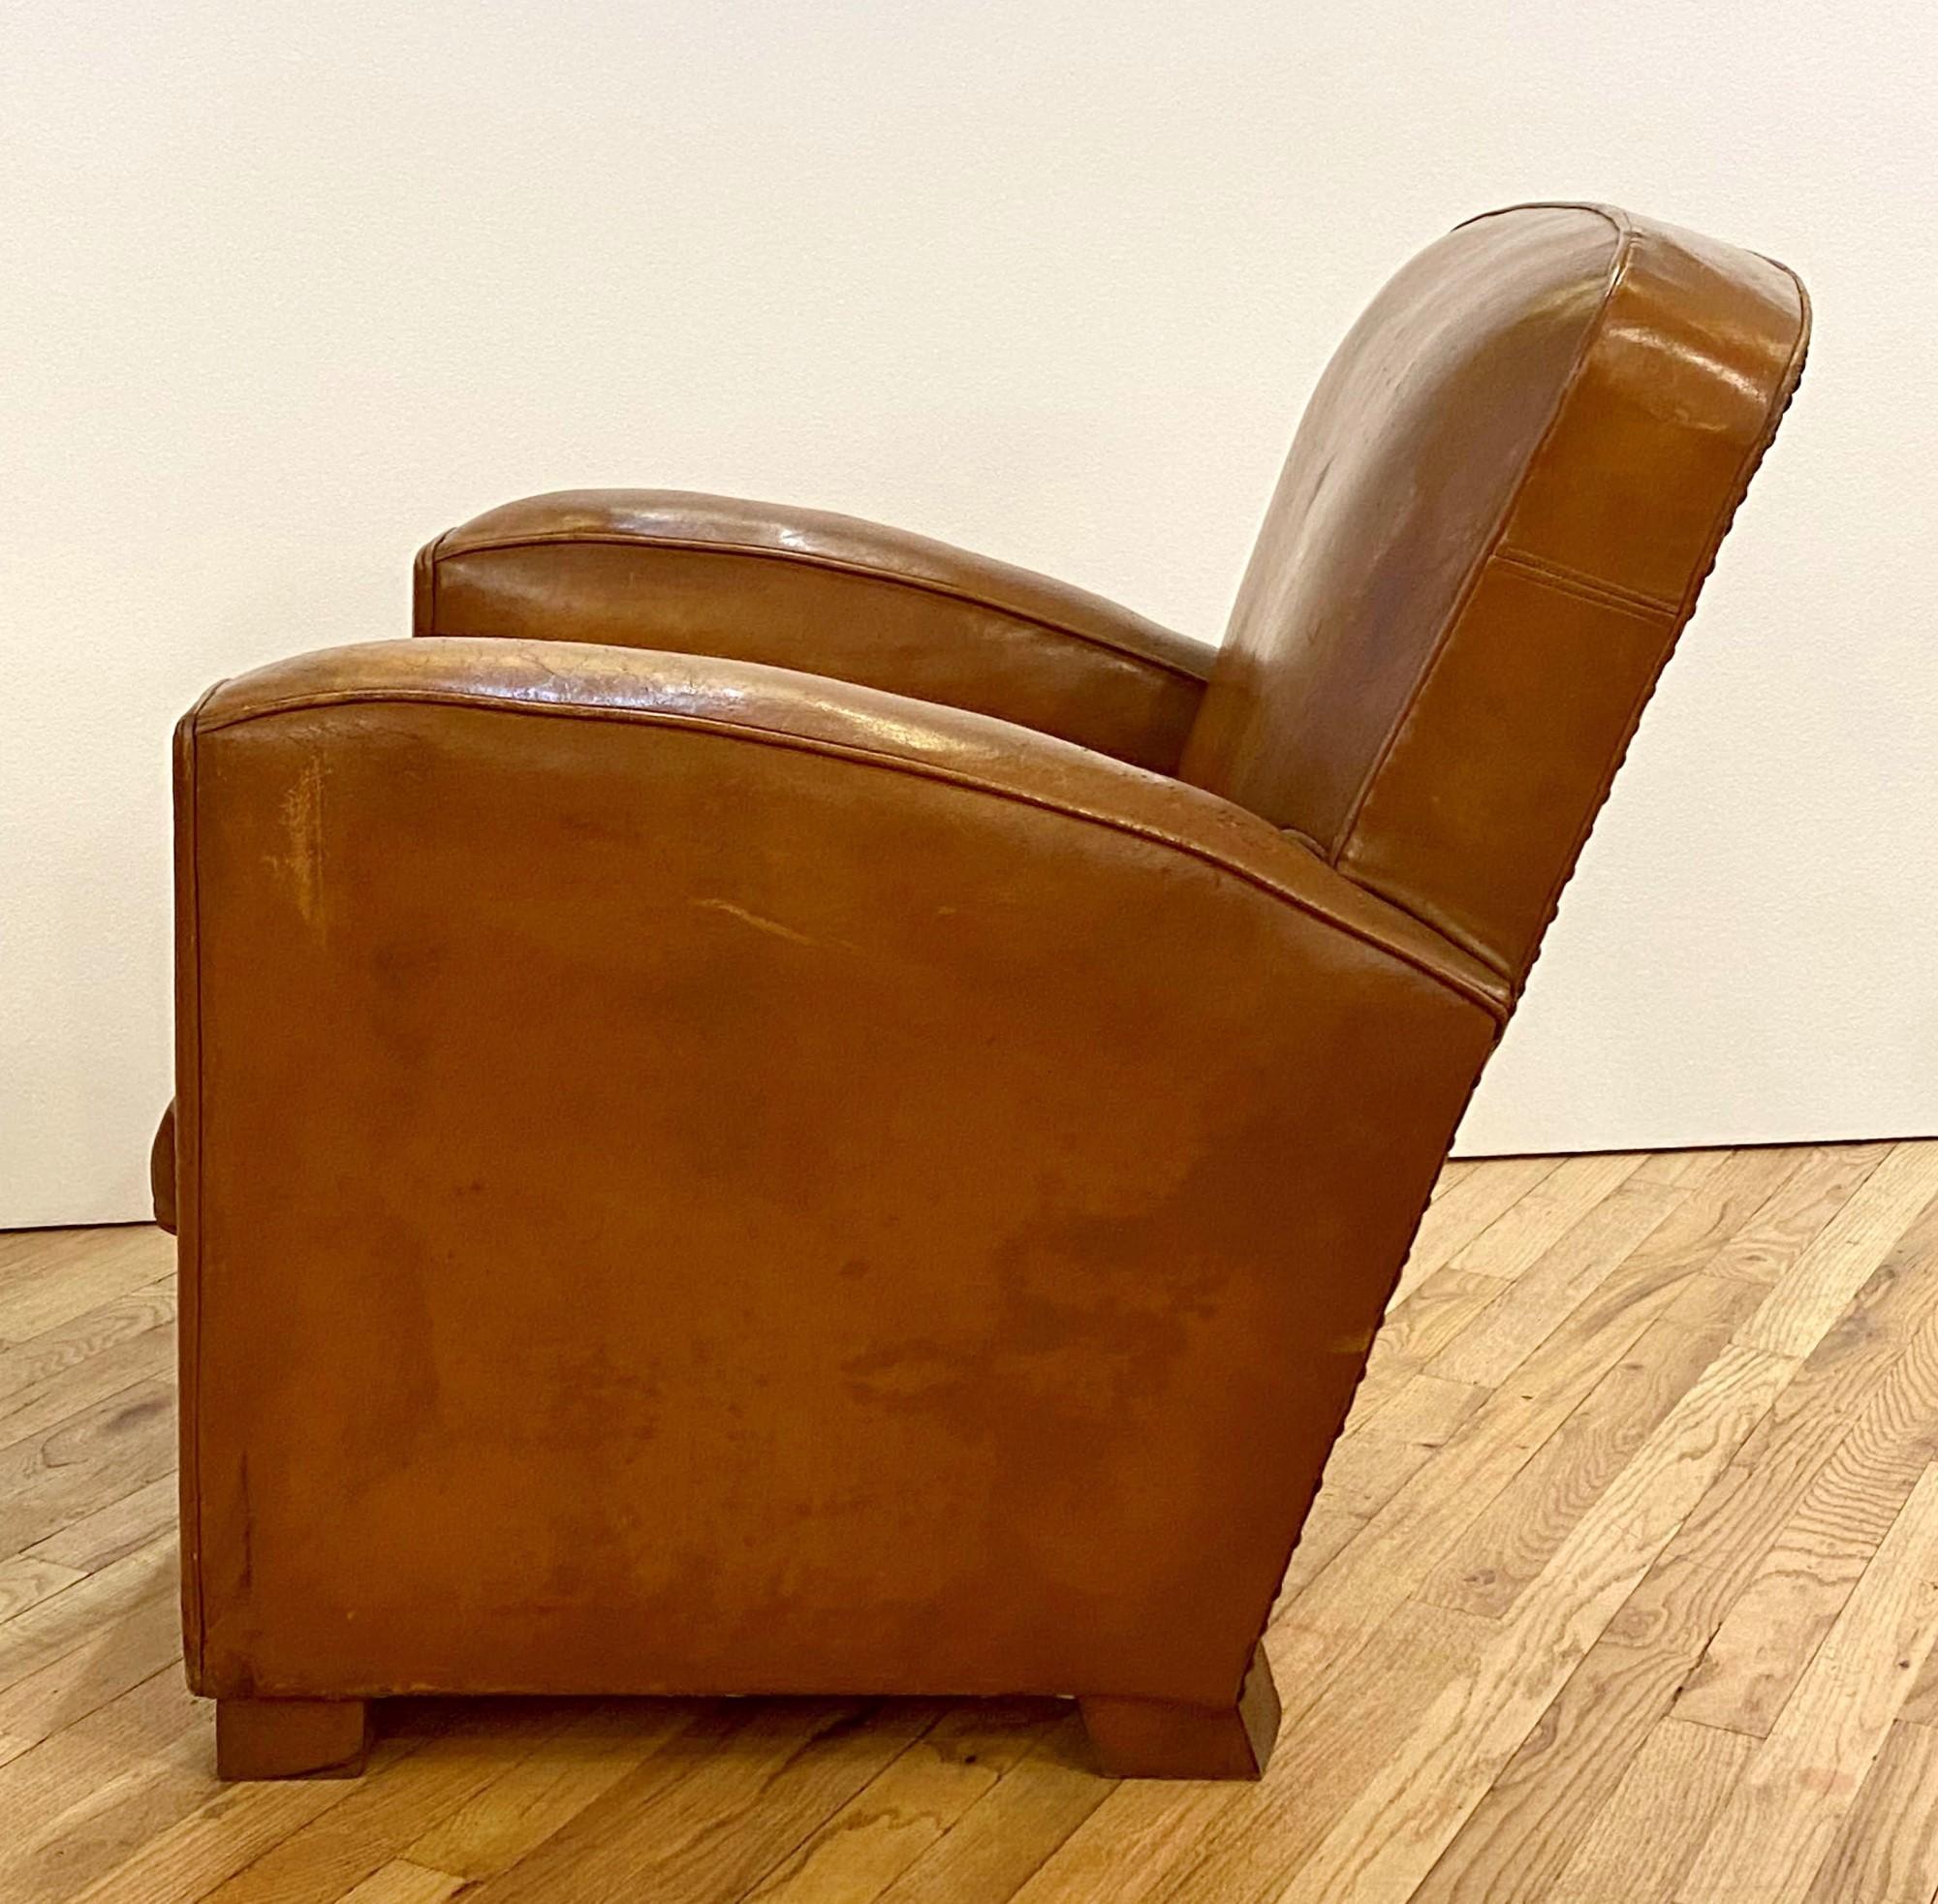 refurbished leather chairs